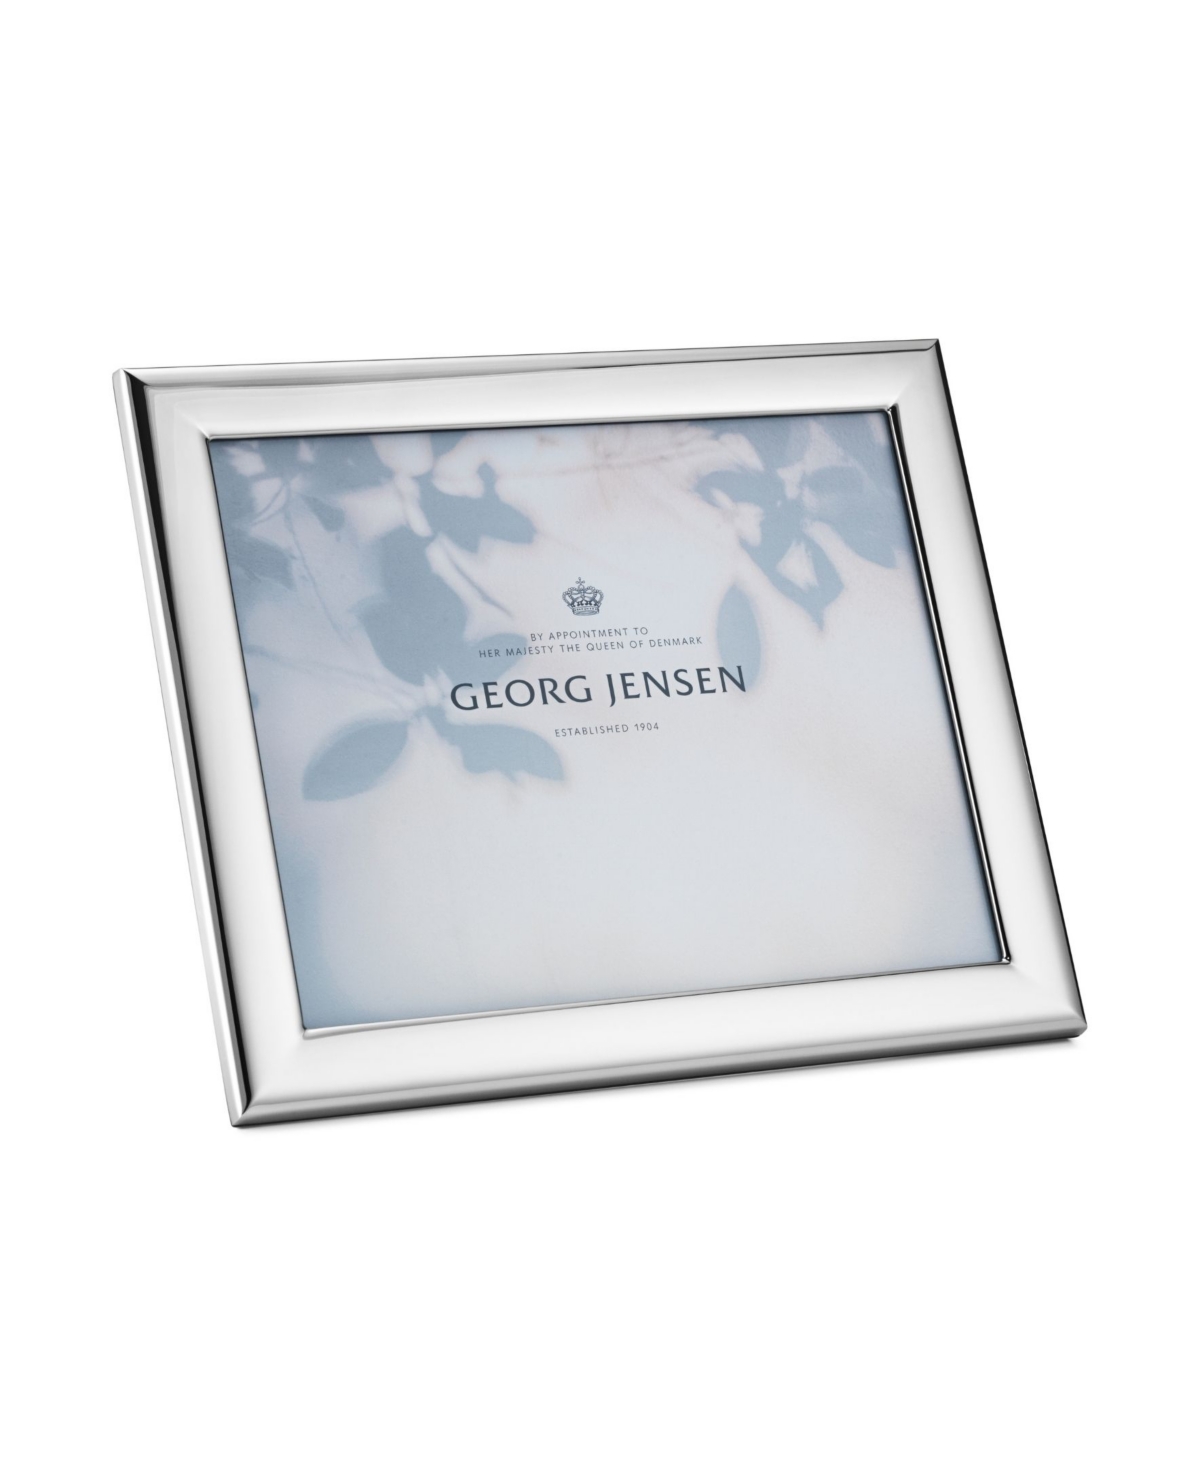 Georg Jensen Modern Frame, 8" X 10" In Silver